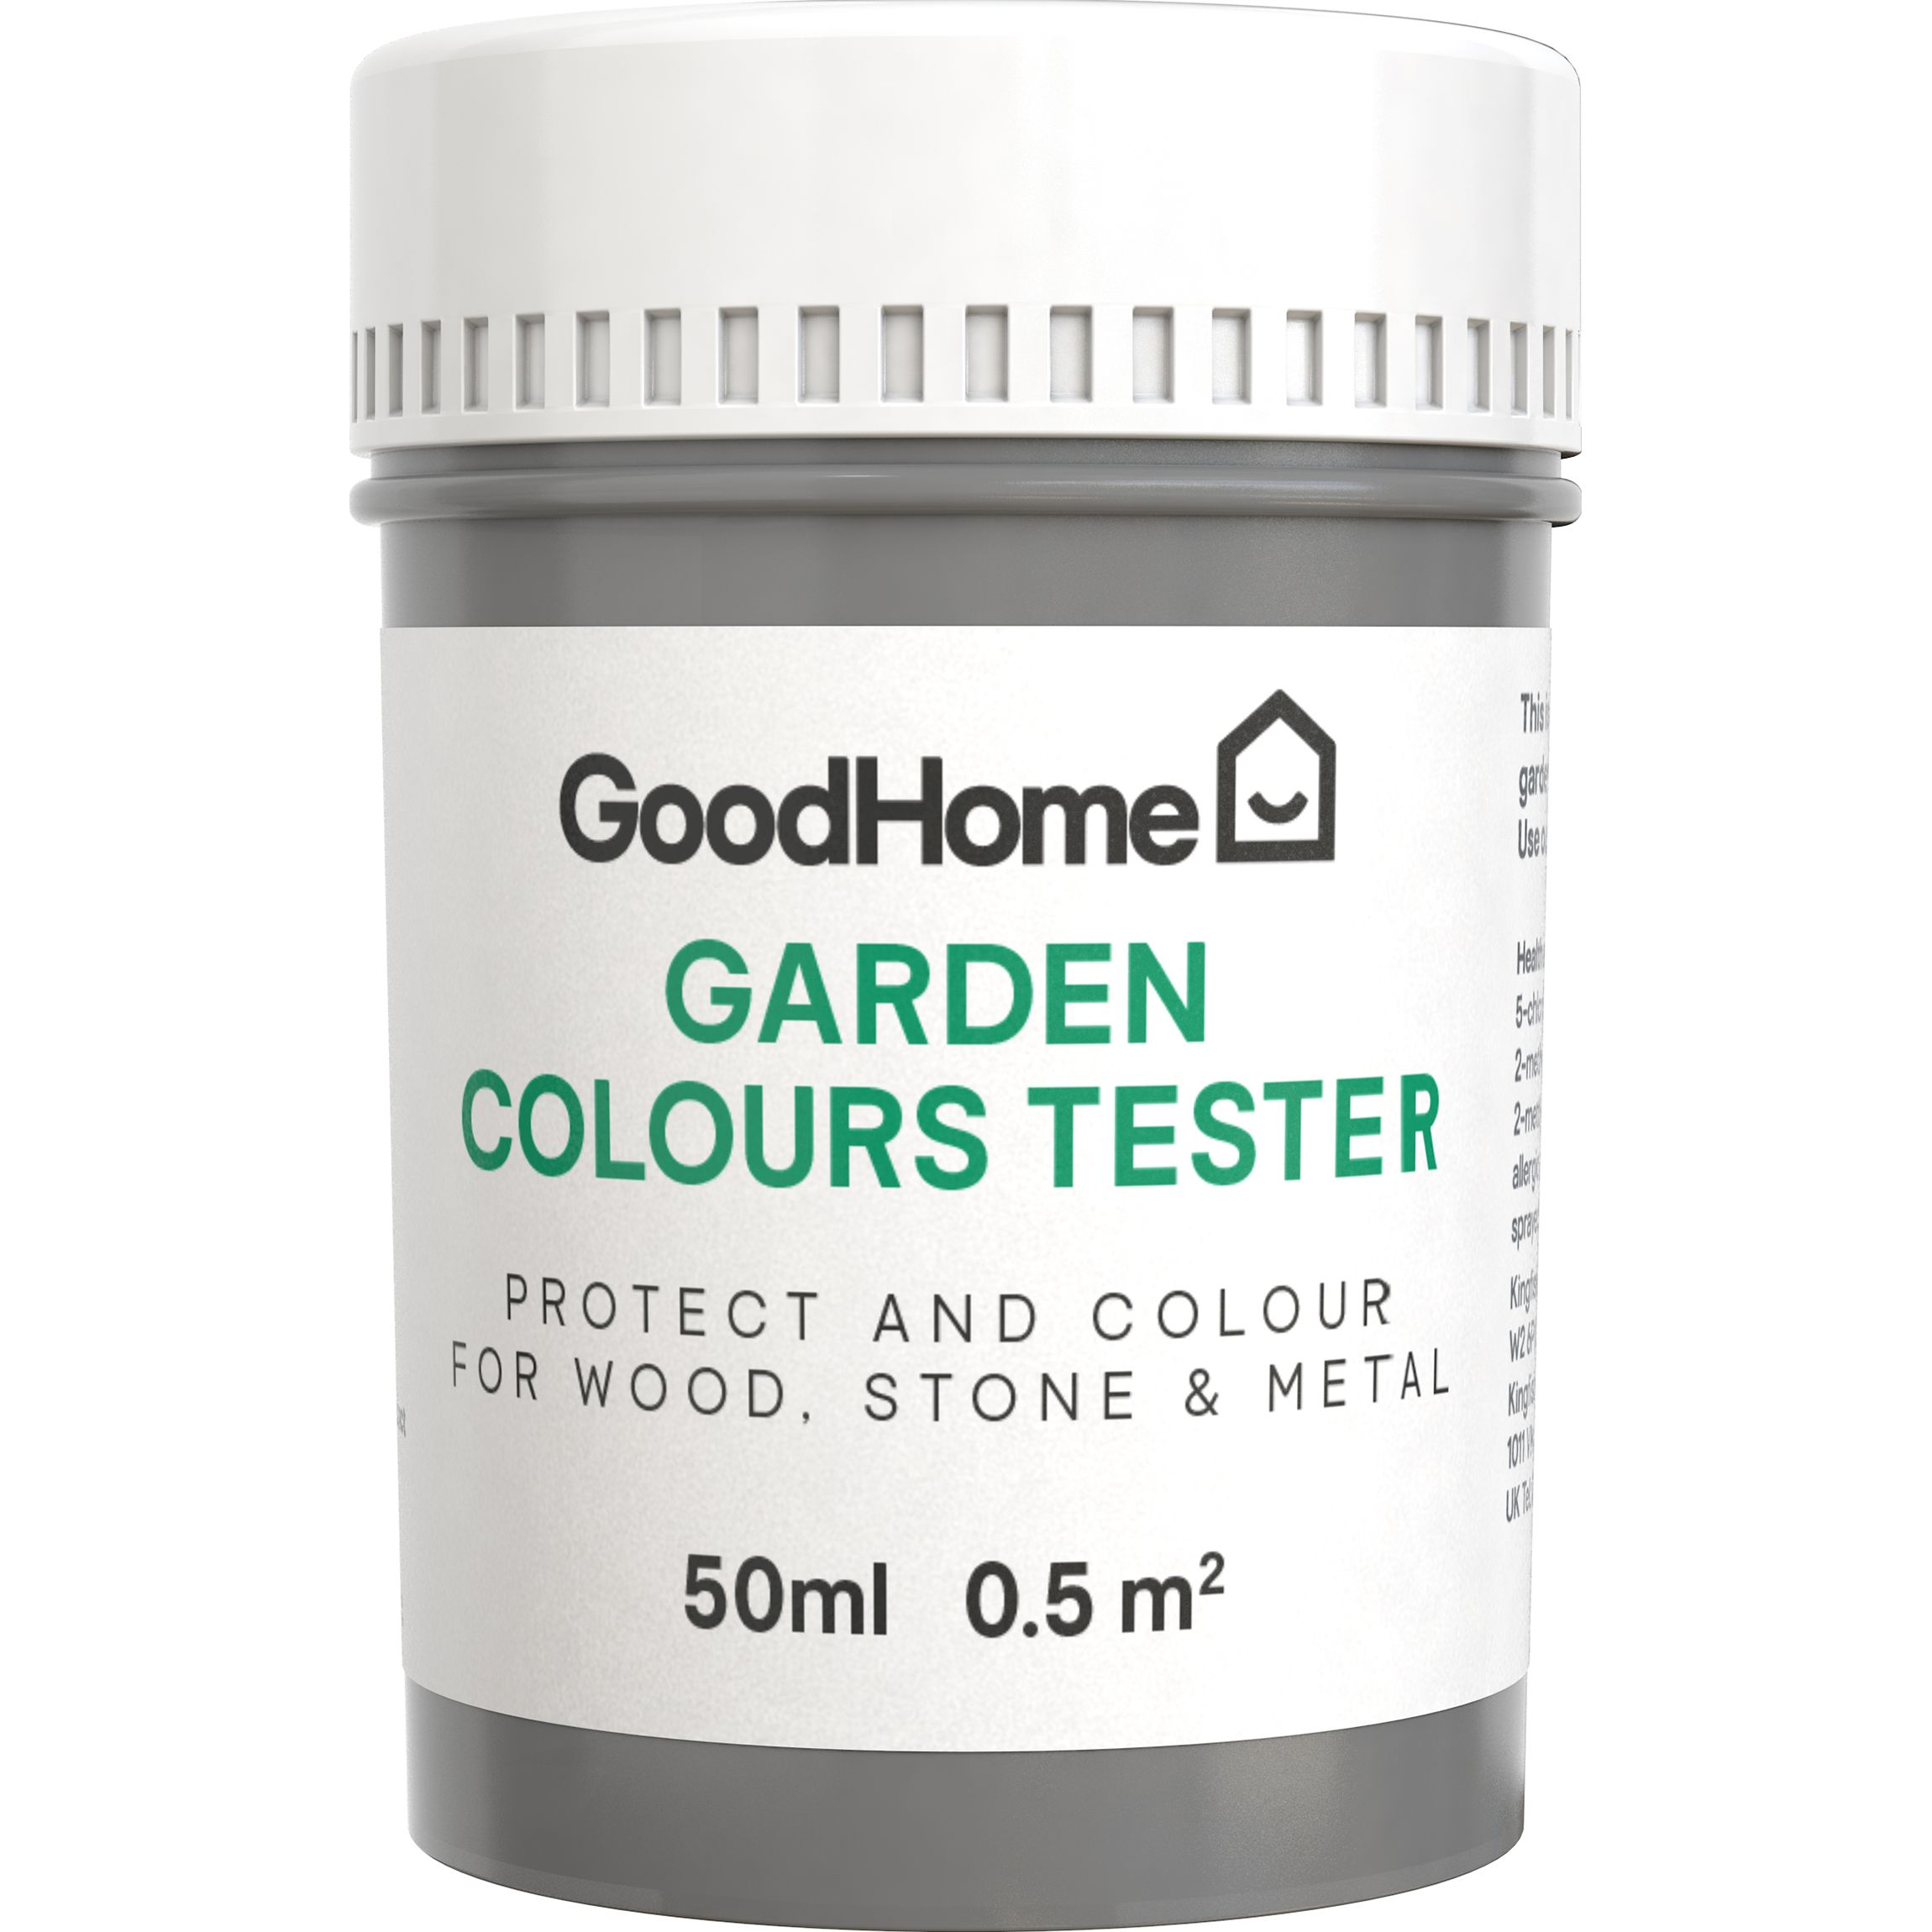 GoodHome Colour It Pimlico Matt Multi-surface paint, 50ml Tester pot